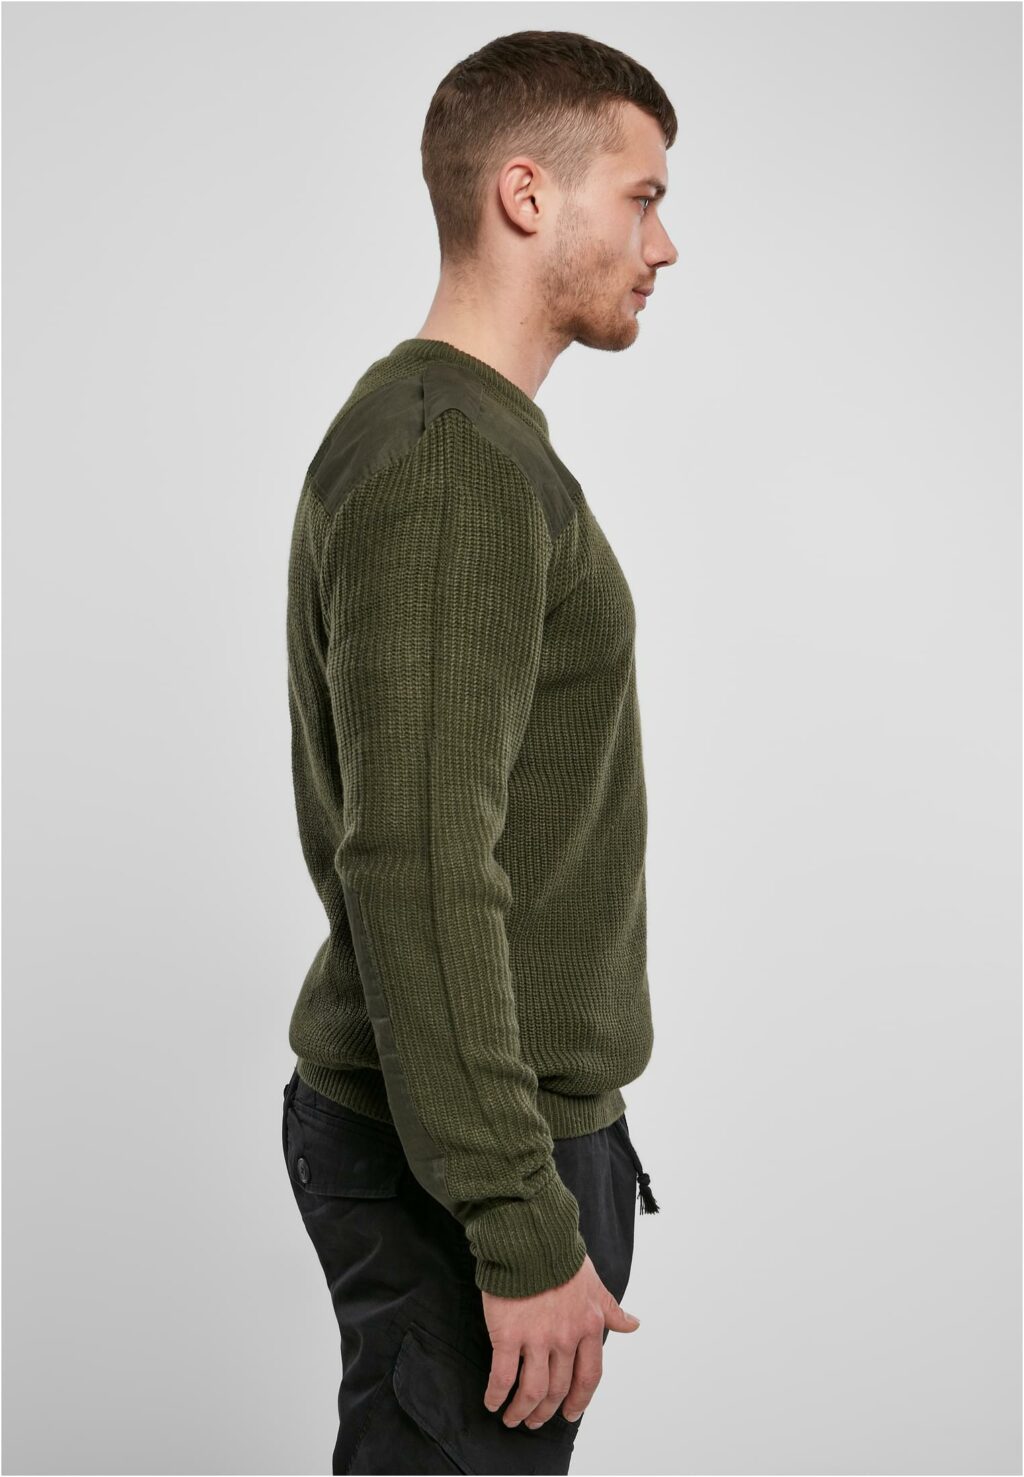 Brandit Military Sweater olive BD5018